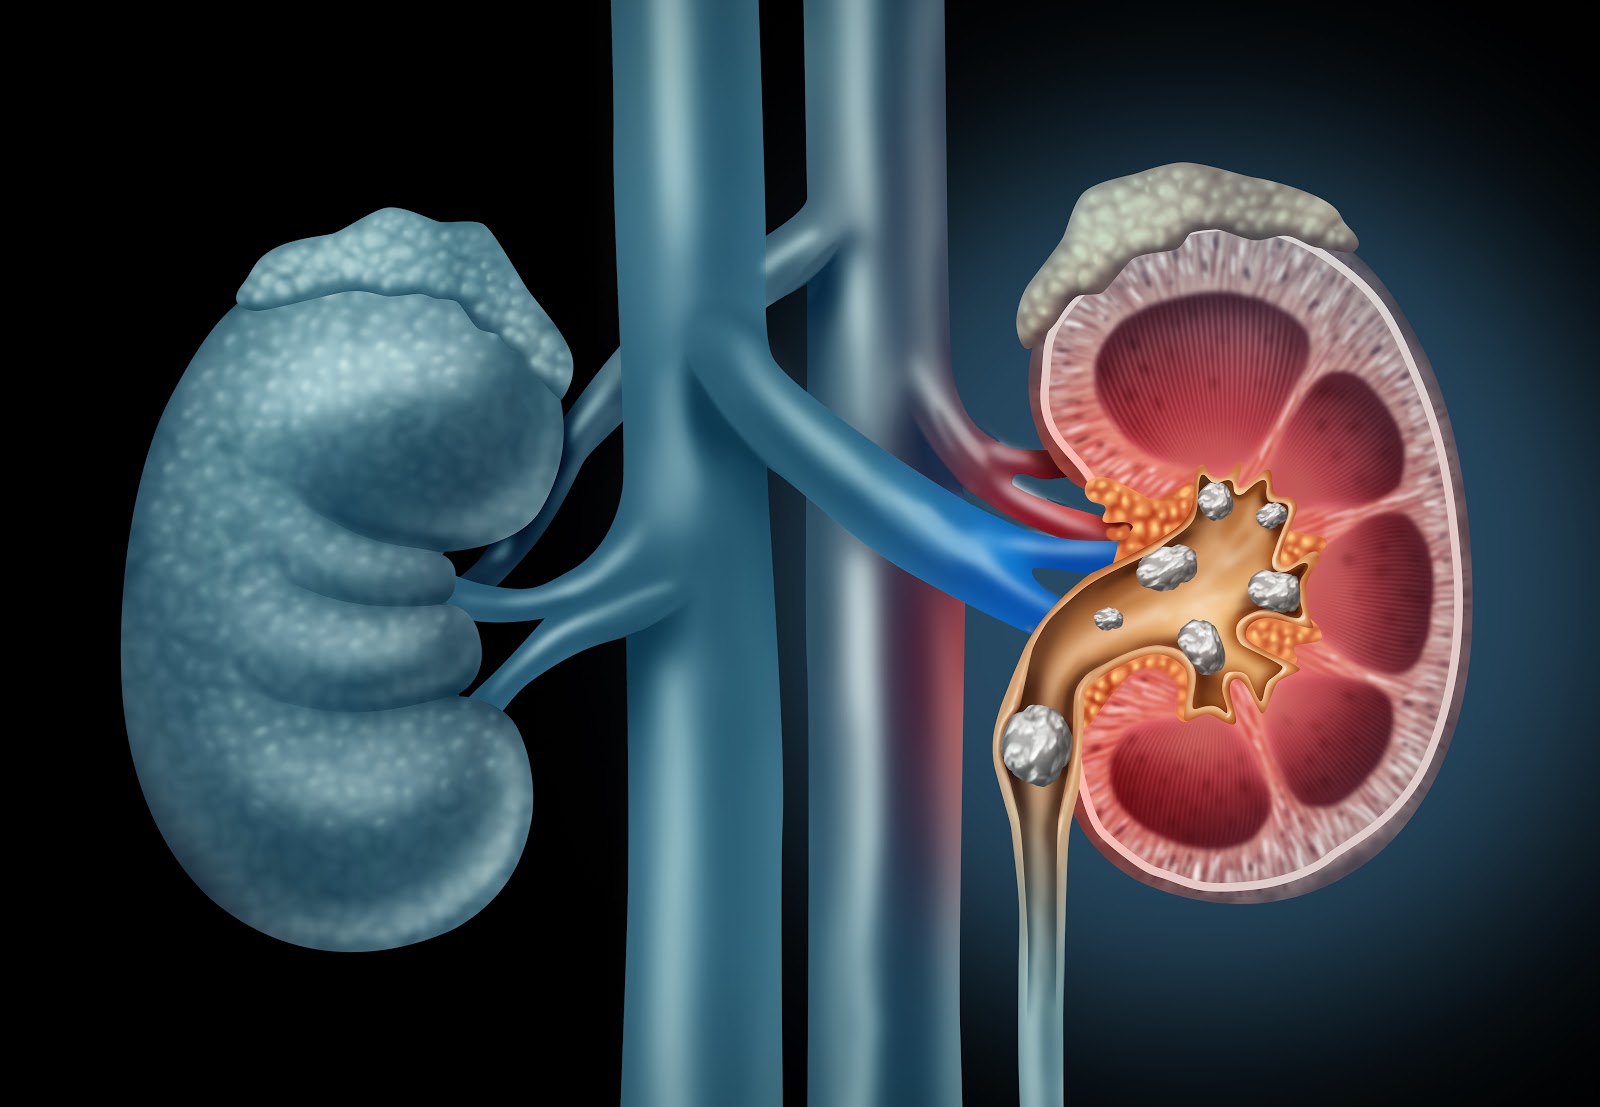 Image depicting kidney stones